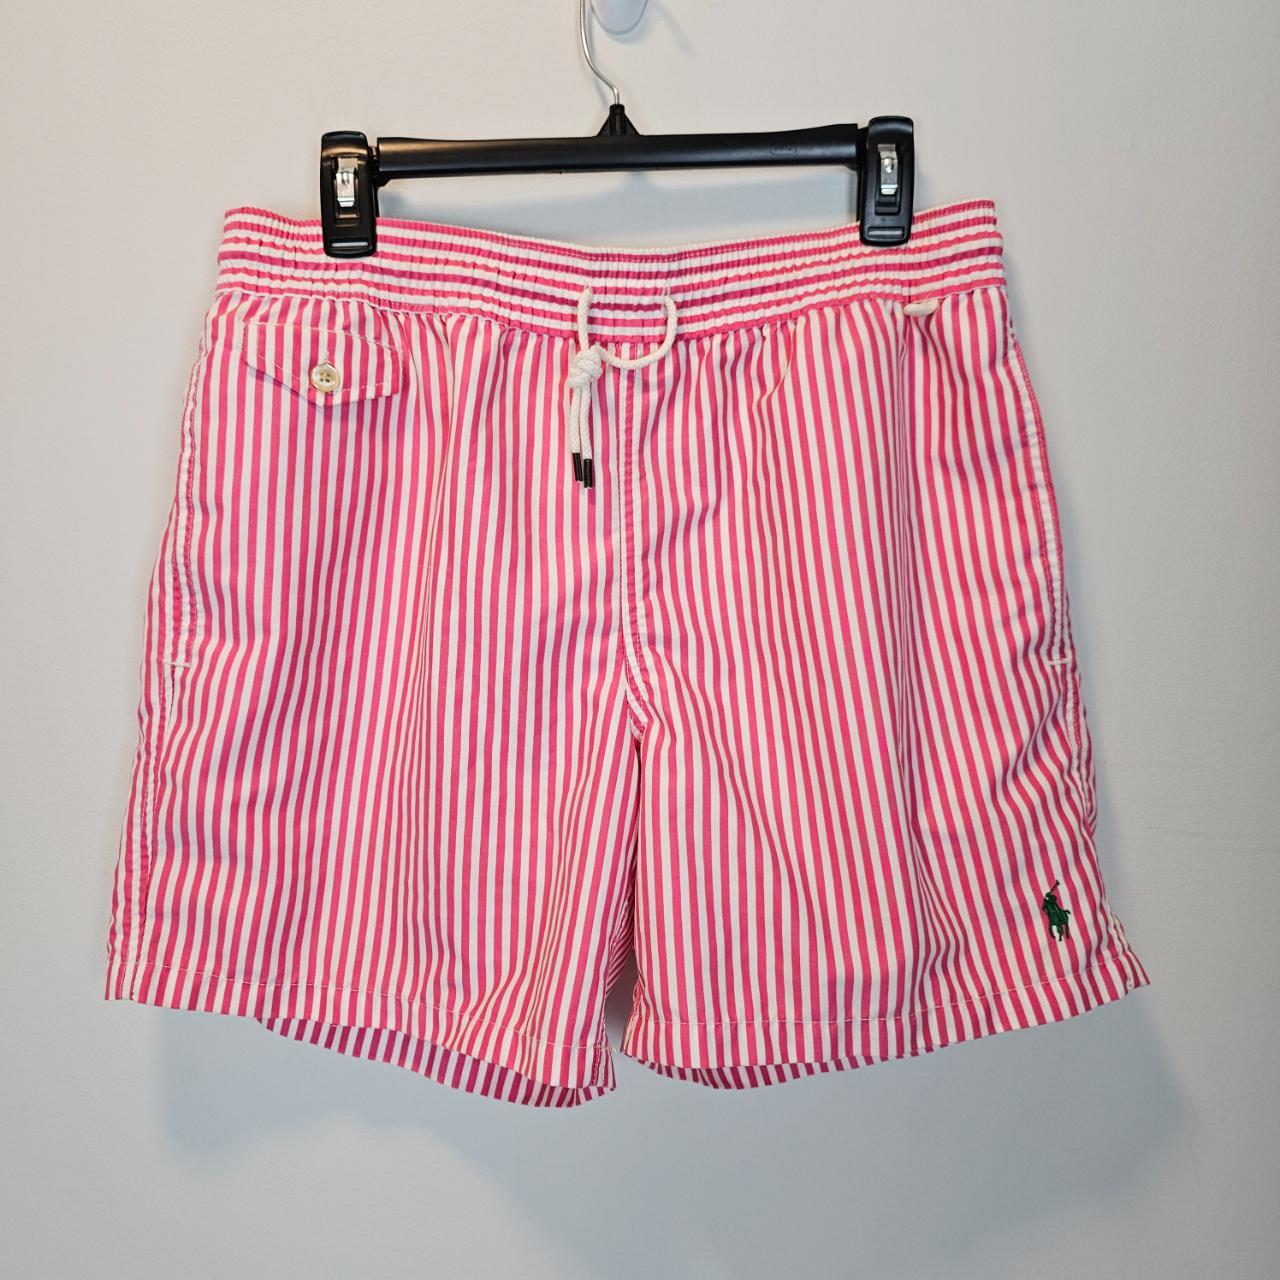 Polo Ralph Lauren Men's Swim Trunks Pink Stripe... - Depop